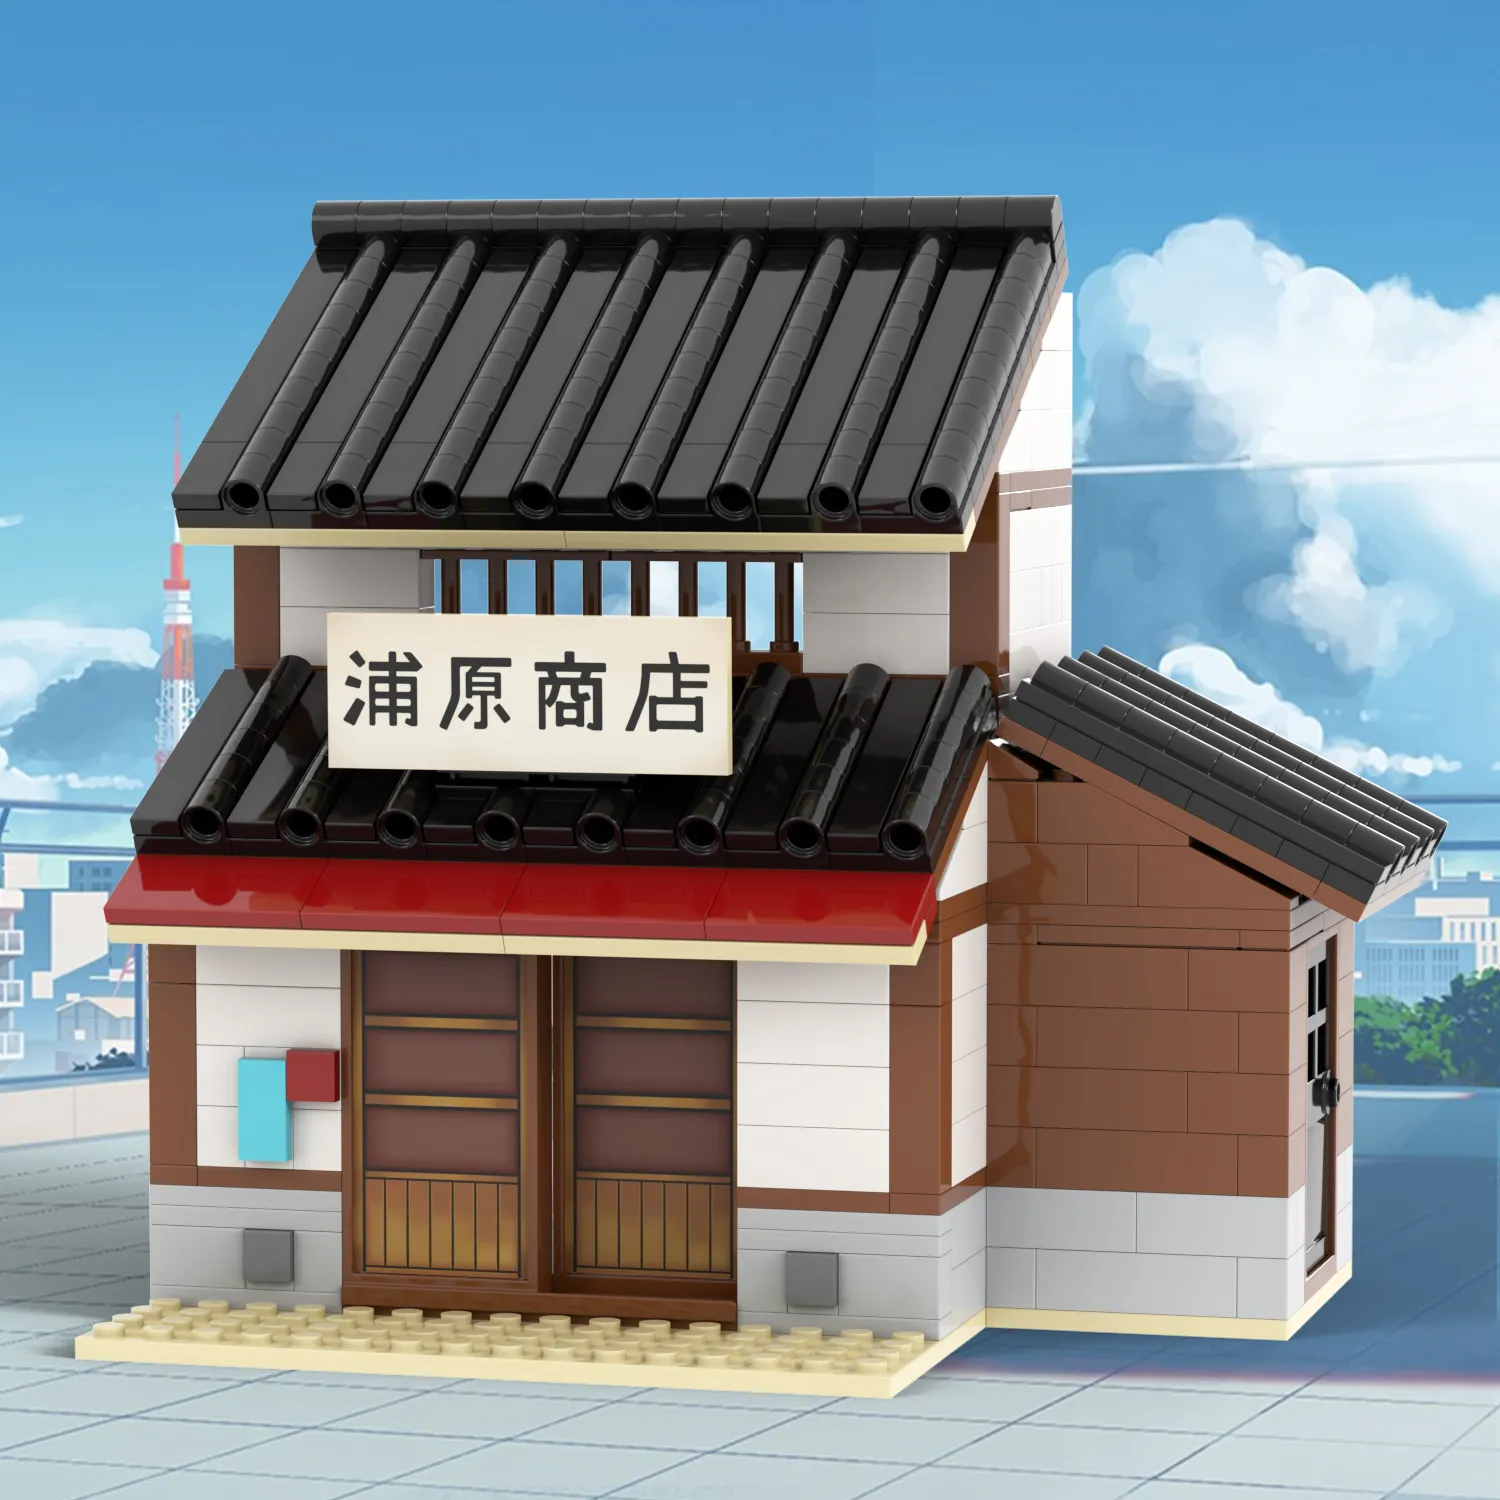 MOC1408 Anime Urahara Store Architecture 785Pcs Building Blocks Creative BLEACH Urahara Kisuke Shop Model Assembly Toys For Kids